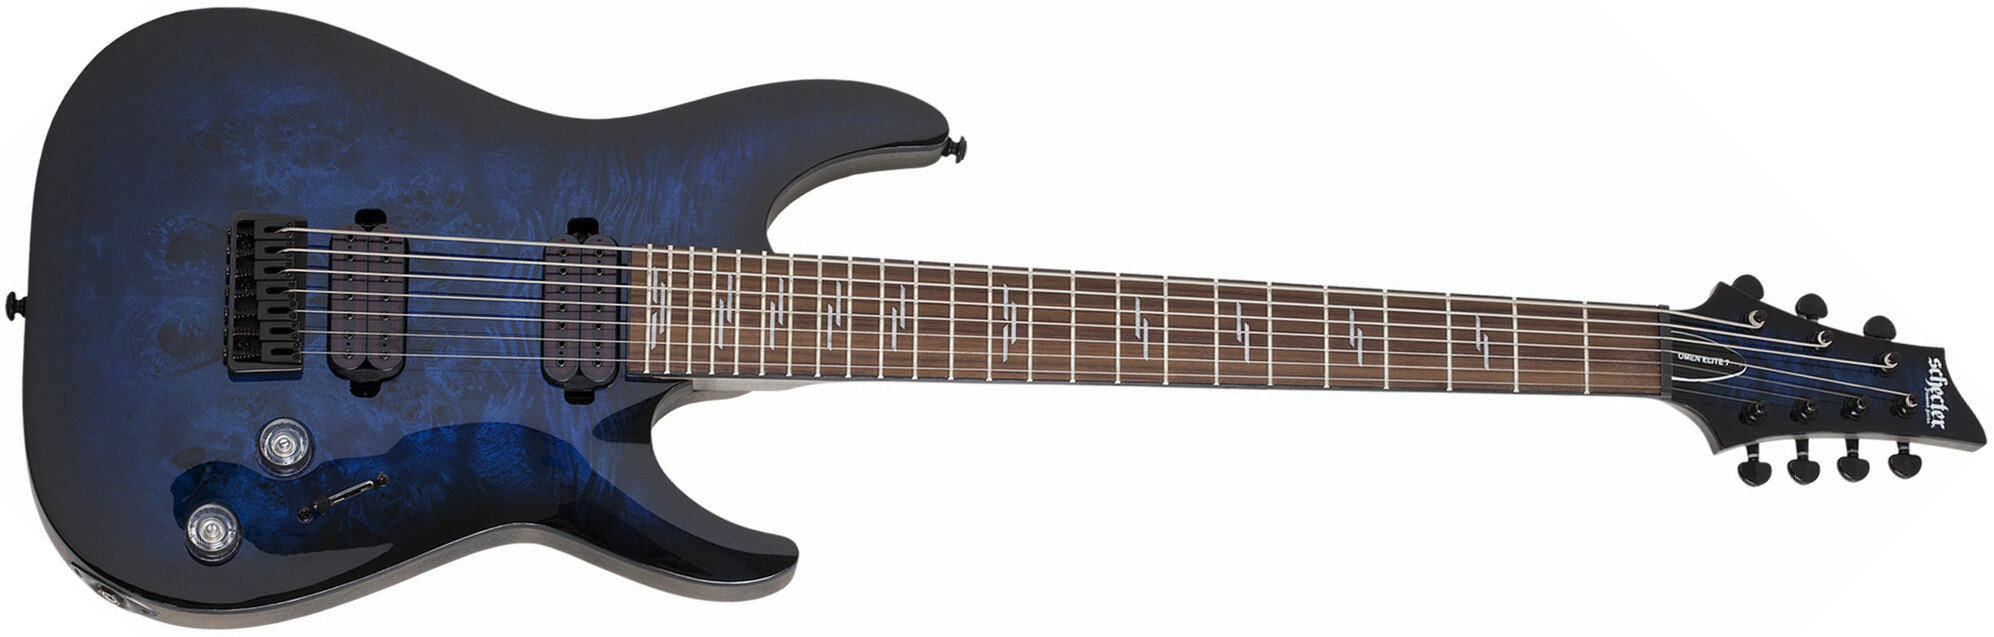 Schecter Omen Elite-7 7c Baryton 2h Ht Rw - See-thru Blue Burst - 7 string electric guitar - Main picture